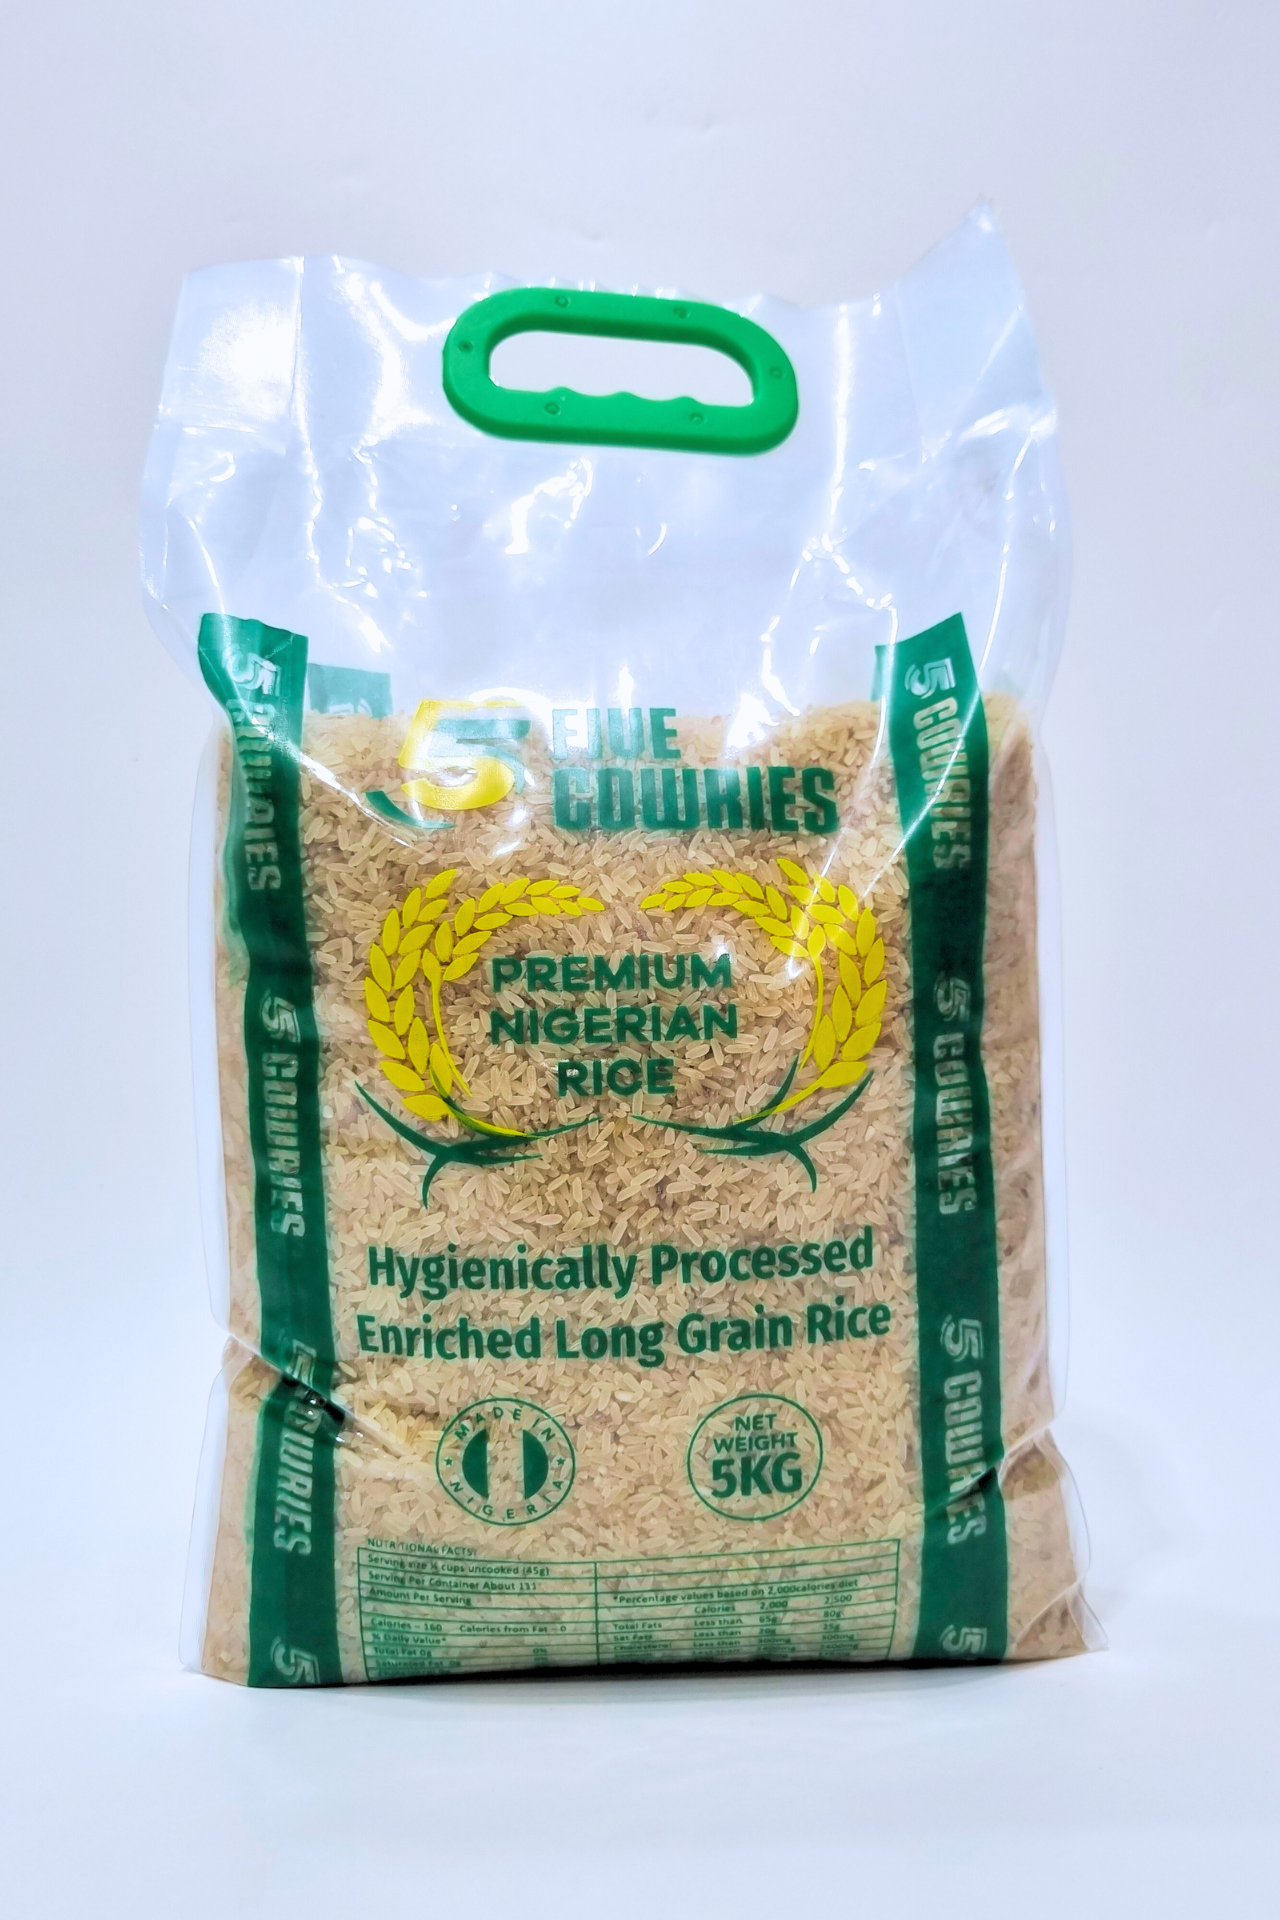 Kitchensolutions Premium Nigerian Rice